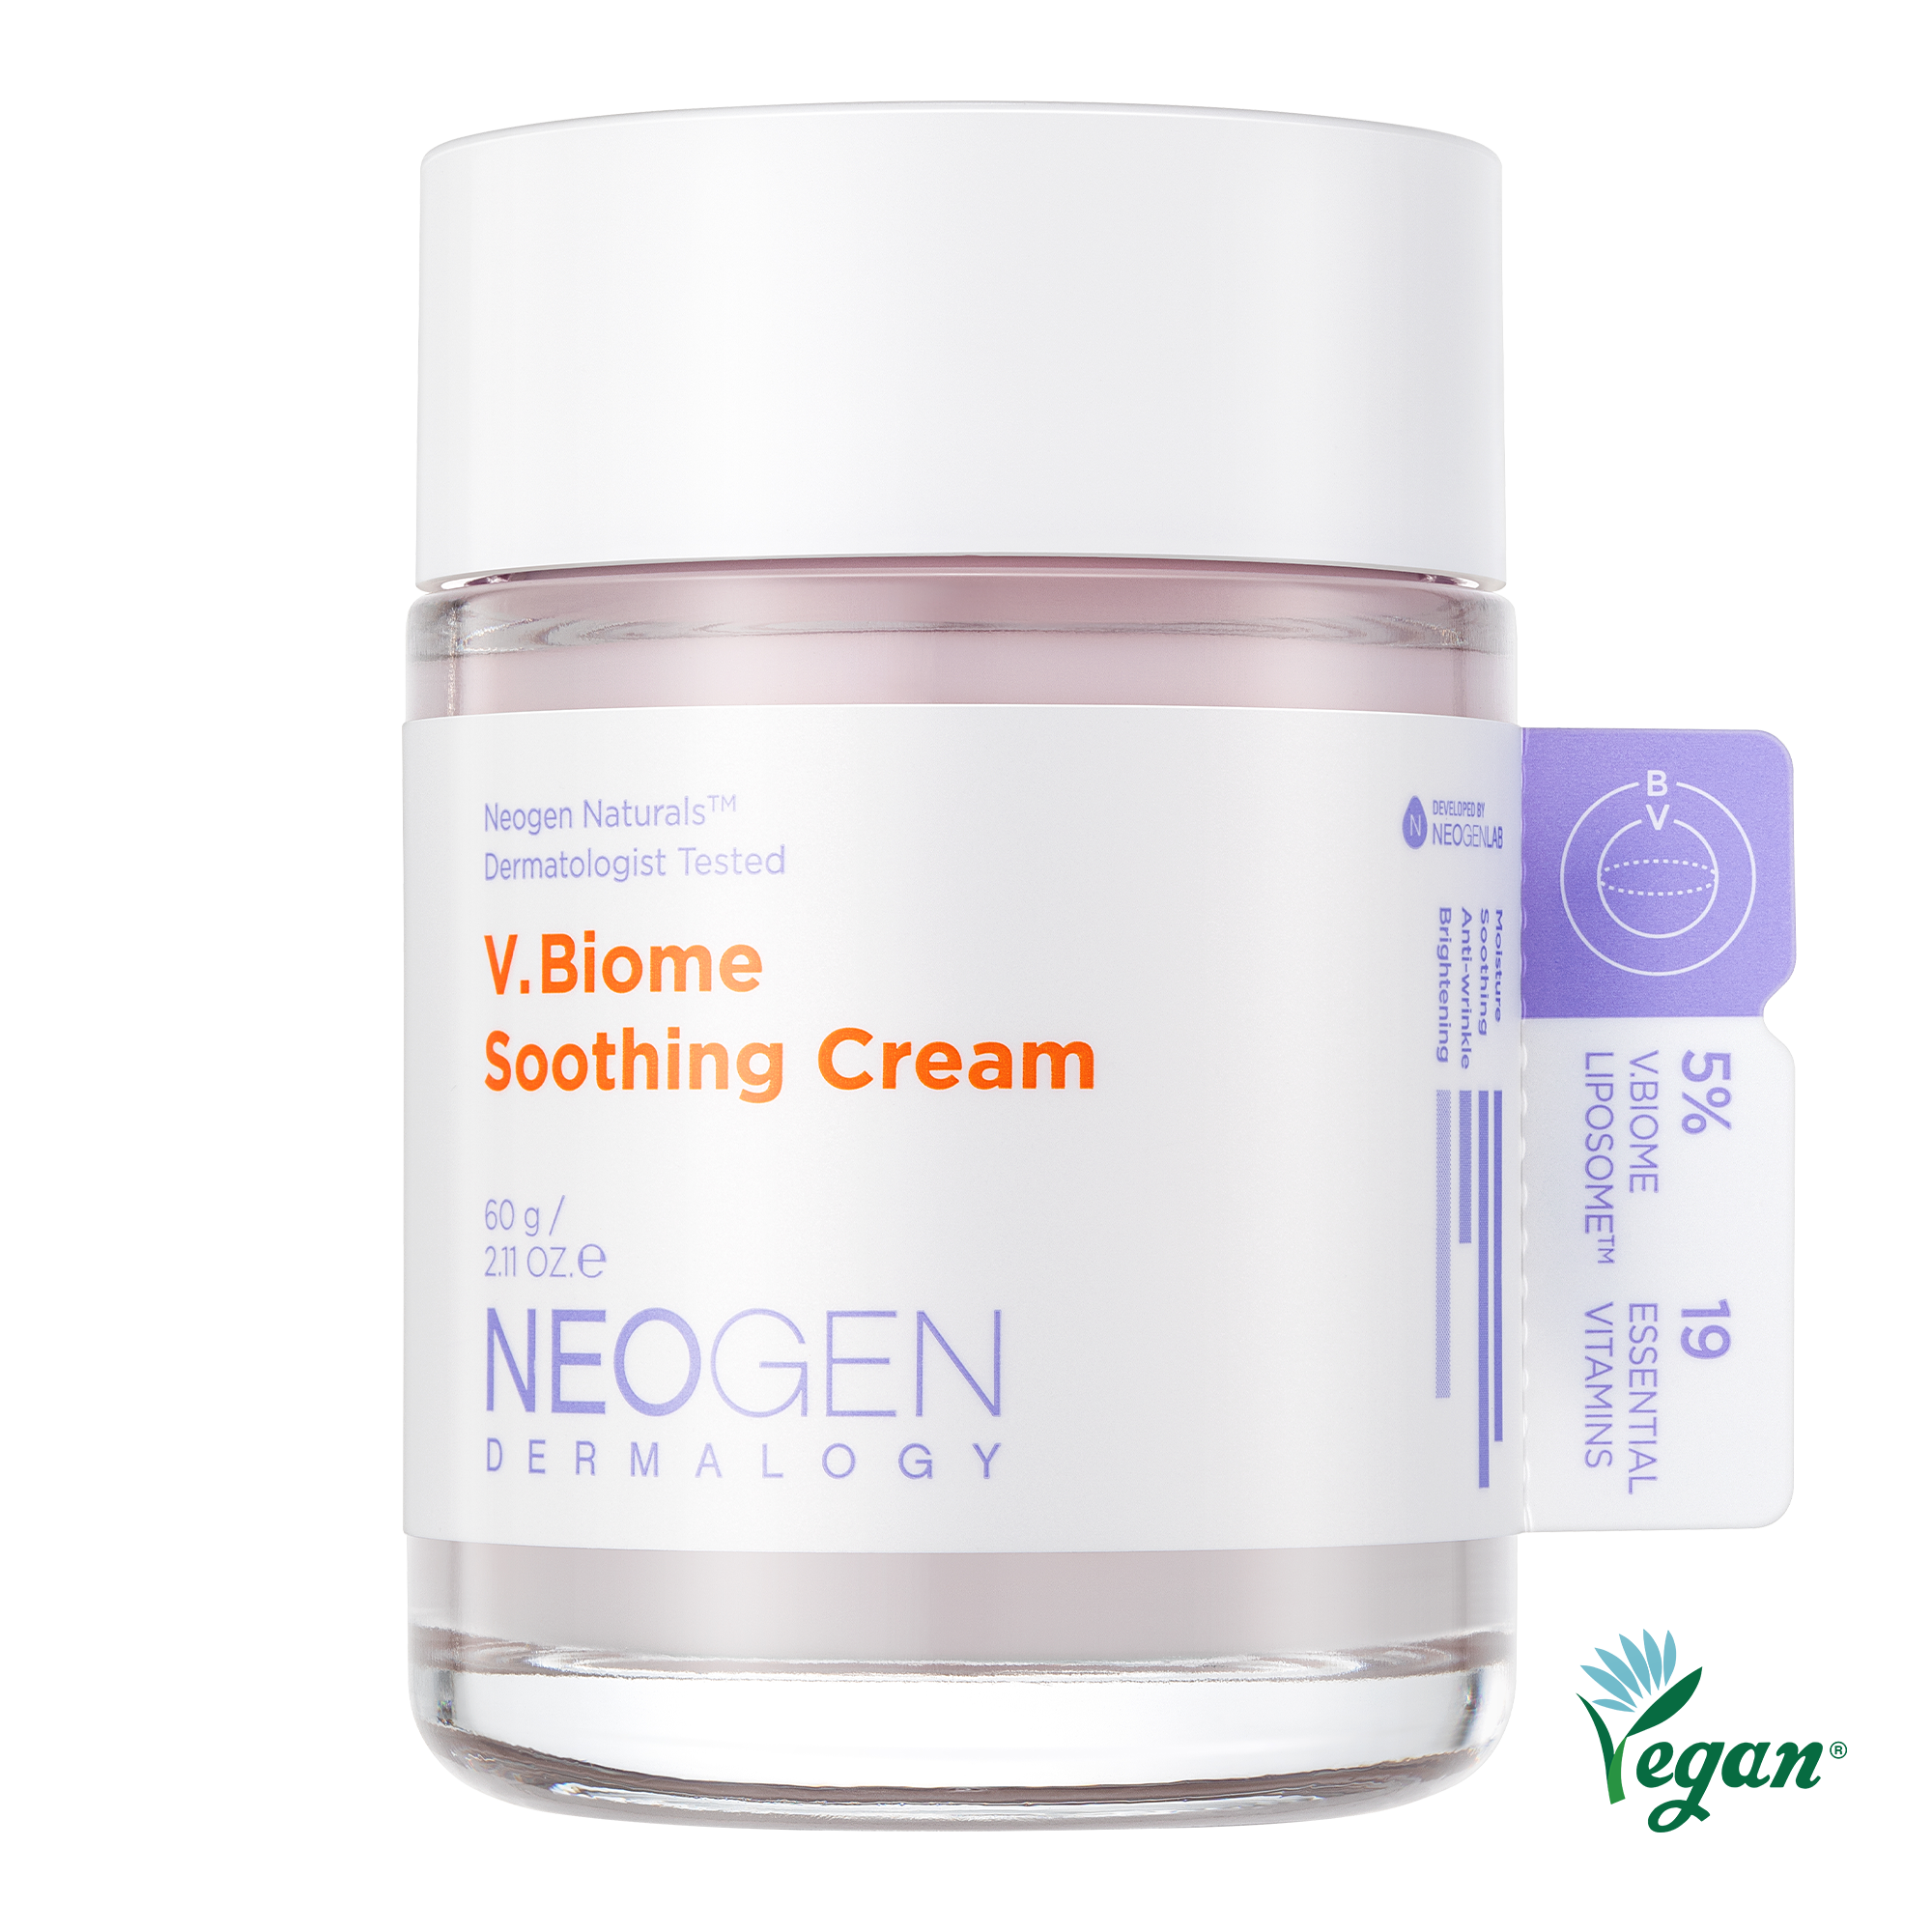 NEOGEN DERMALOGY V.Biome Soothing Cream